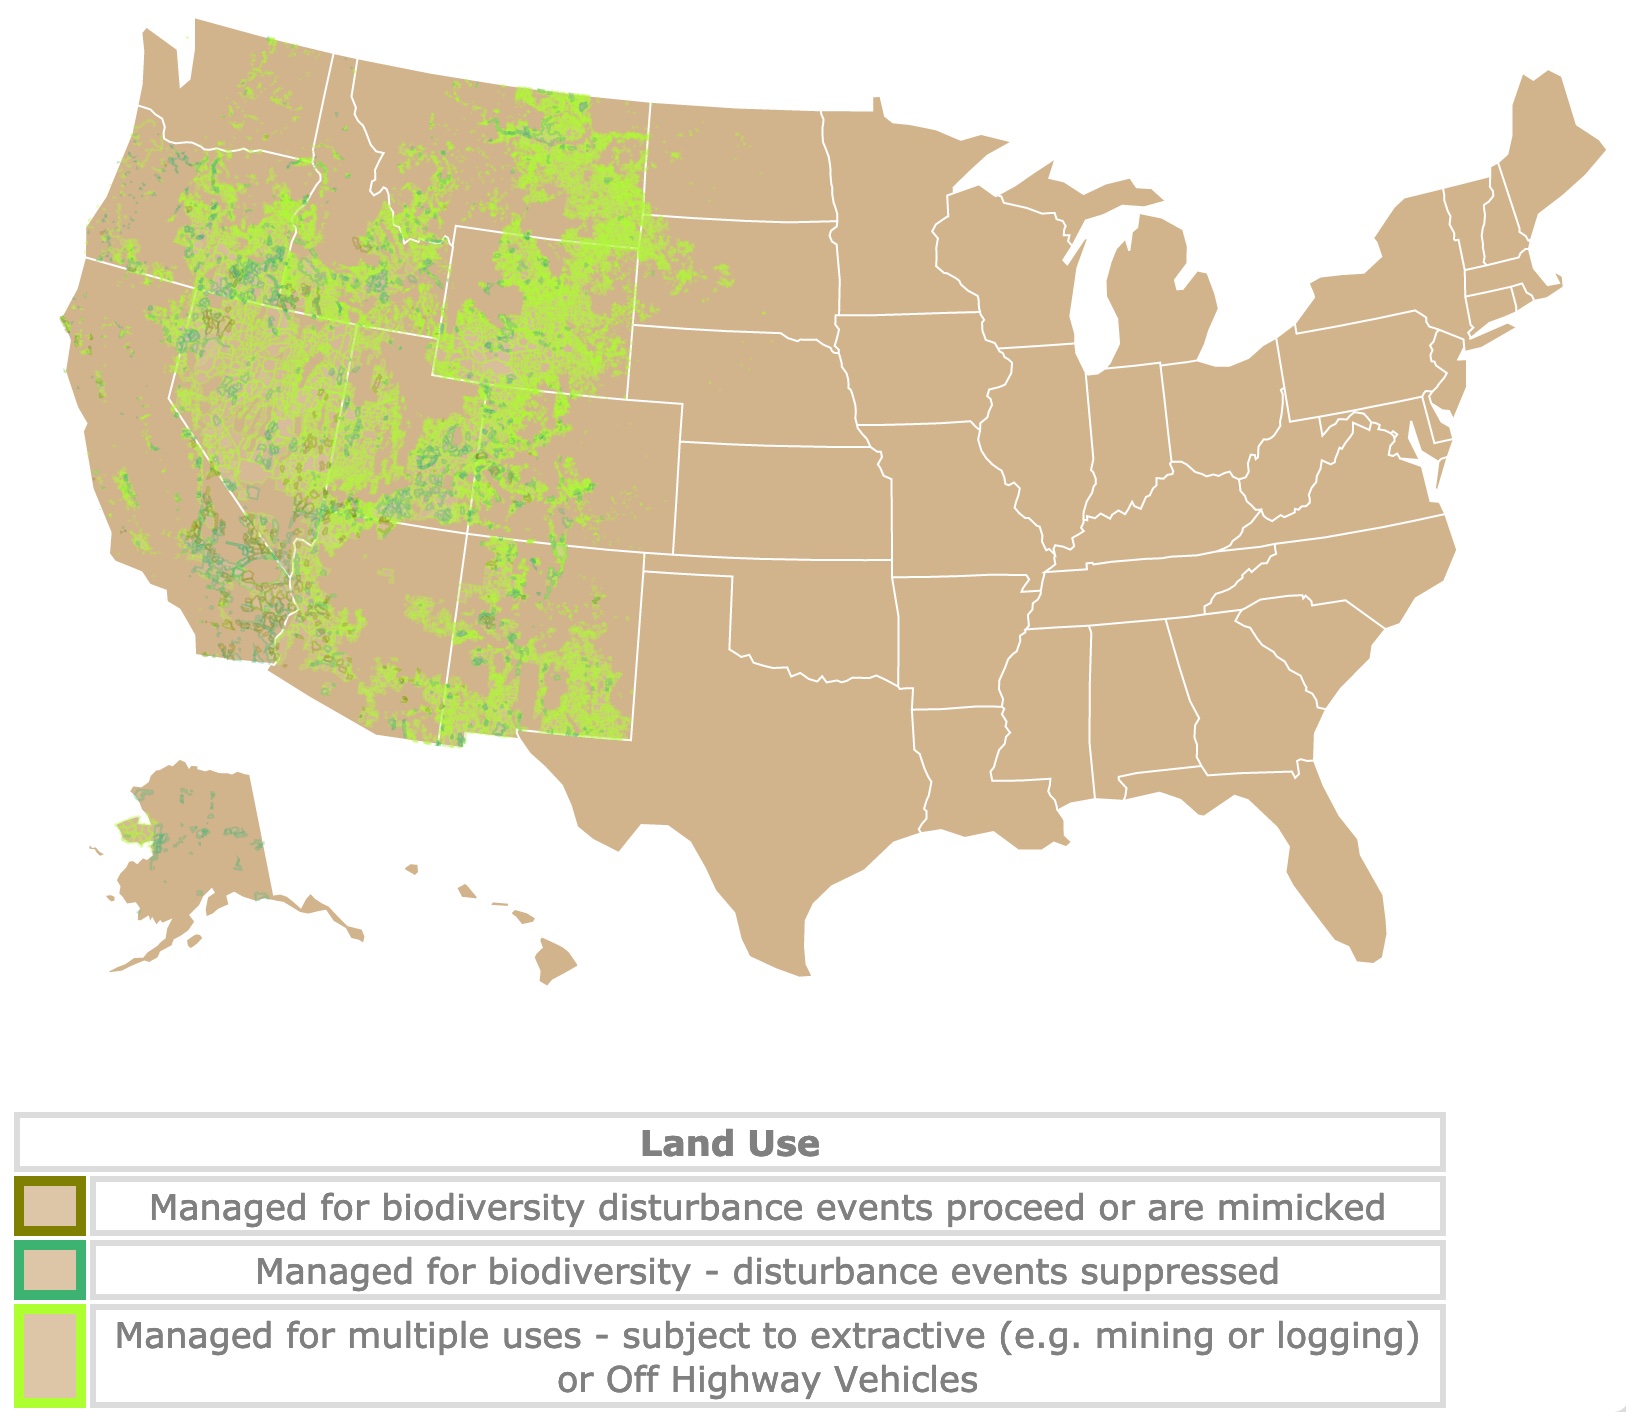 Bureau of Land Management Map and Uses